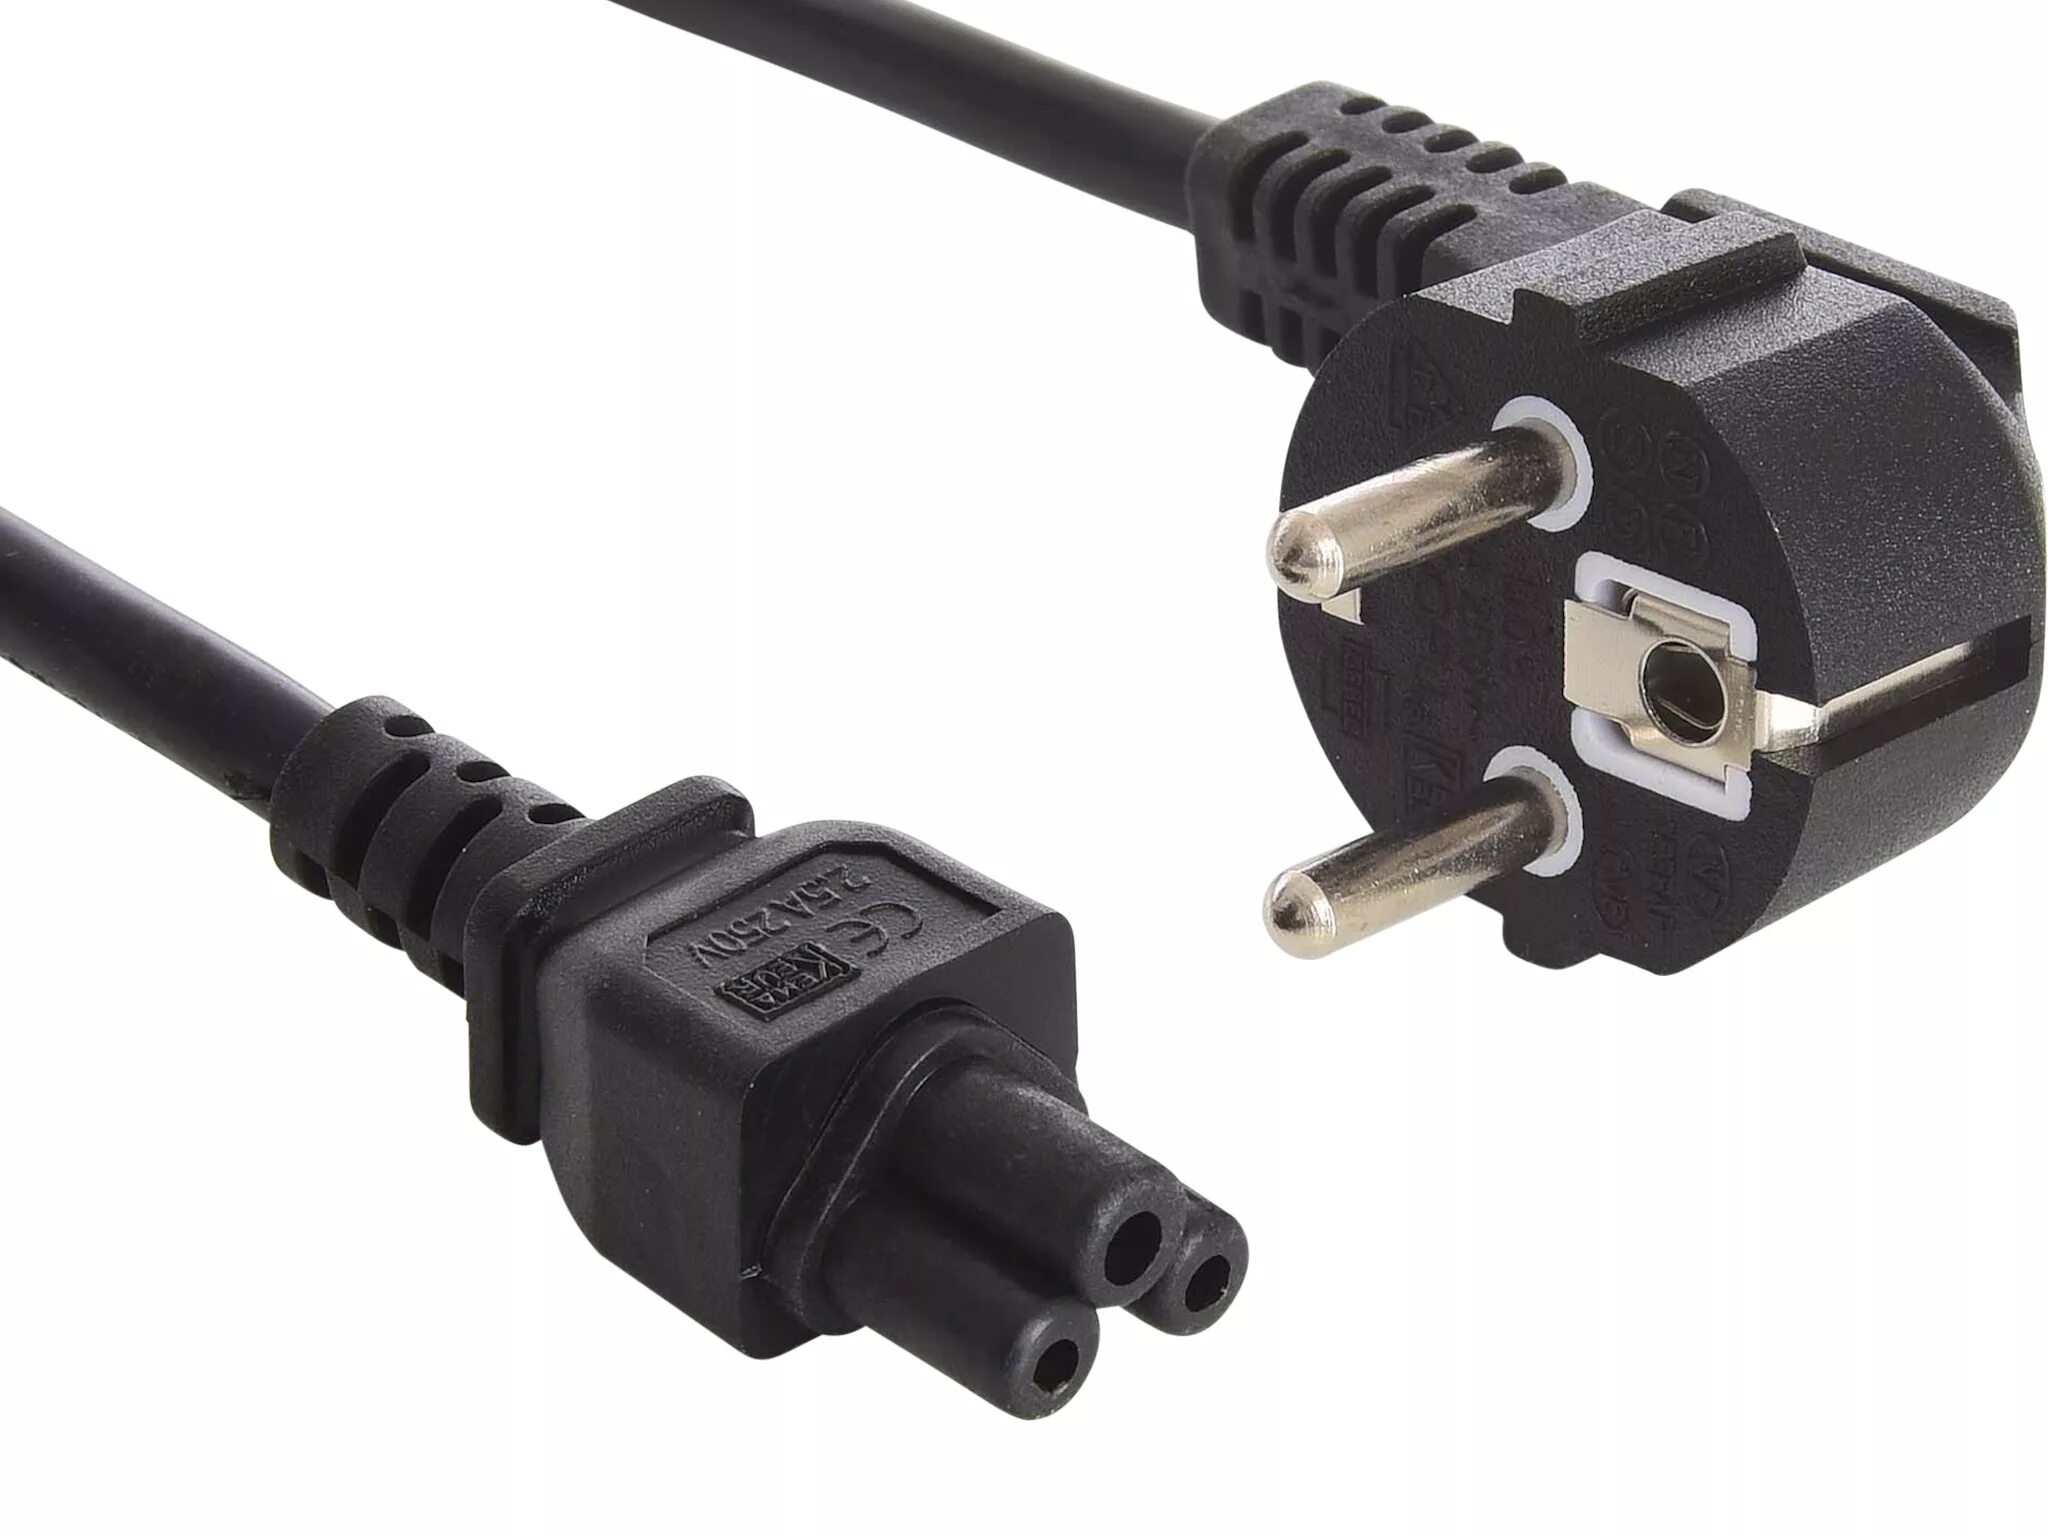 Power Cord - кабель питания 220v. Удлинитель кабеля питания 8m-8f. Кабель питания ATCOM at16134, 1.8м, 2 Pin. Voltman PC Power Cable 1.5m. Шнур питания 8